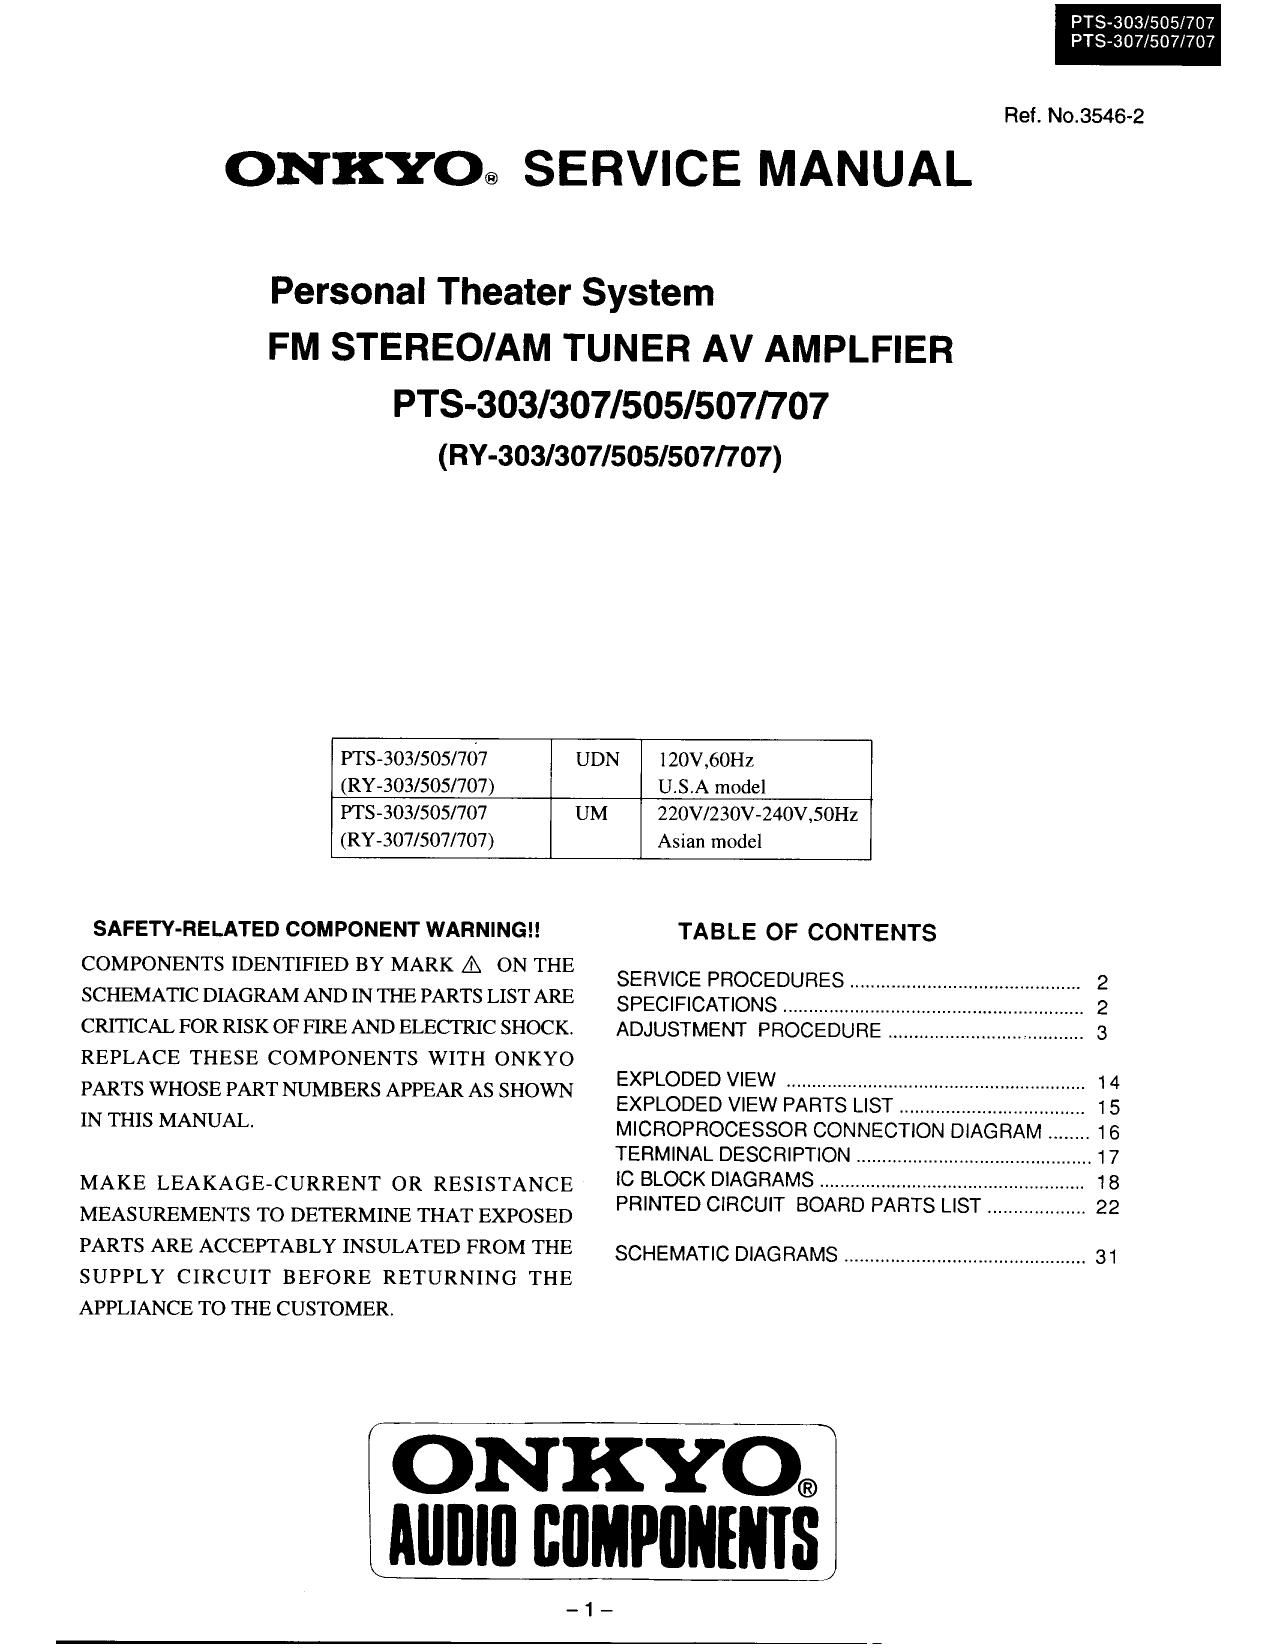 Onkyo PTS 507 Service Manual